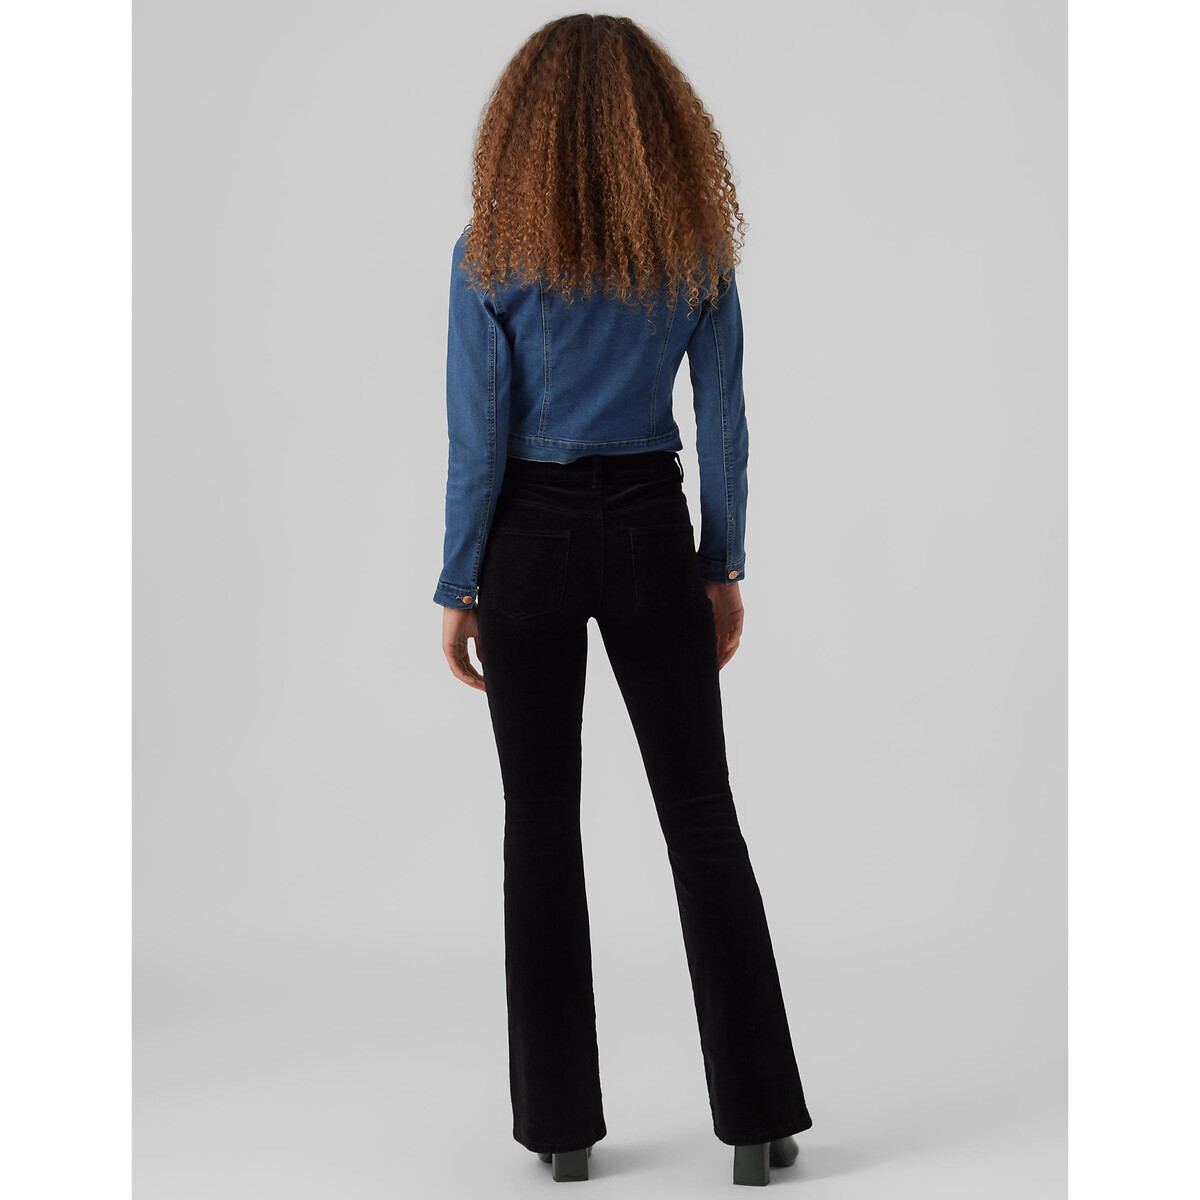 Жакет Короткий из джинсовой ткани XS синий LaRedoute, размер XS - фото 4